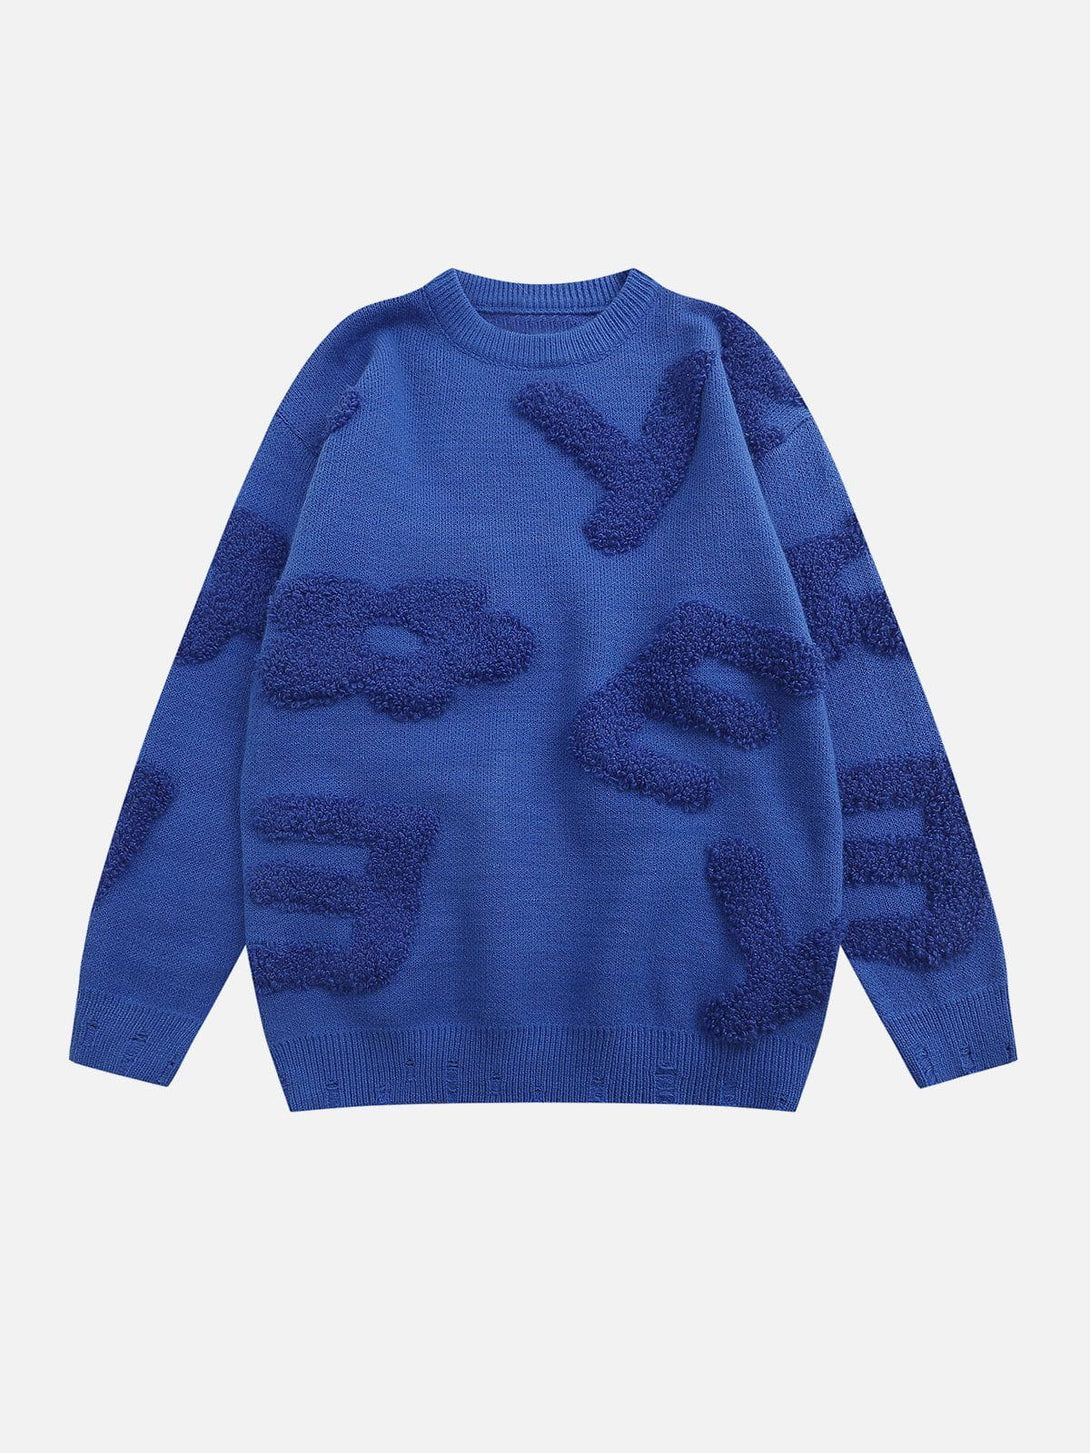 Majesda® - Letters Jacquard Sweater outfit ideas streetwear fashion